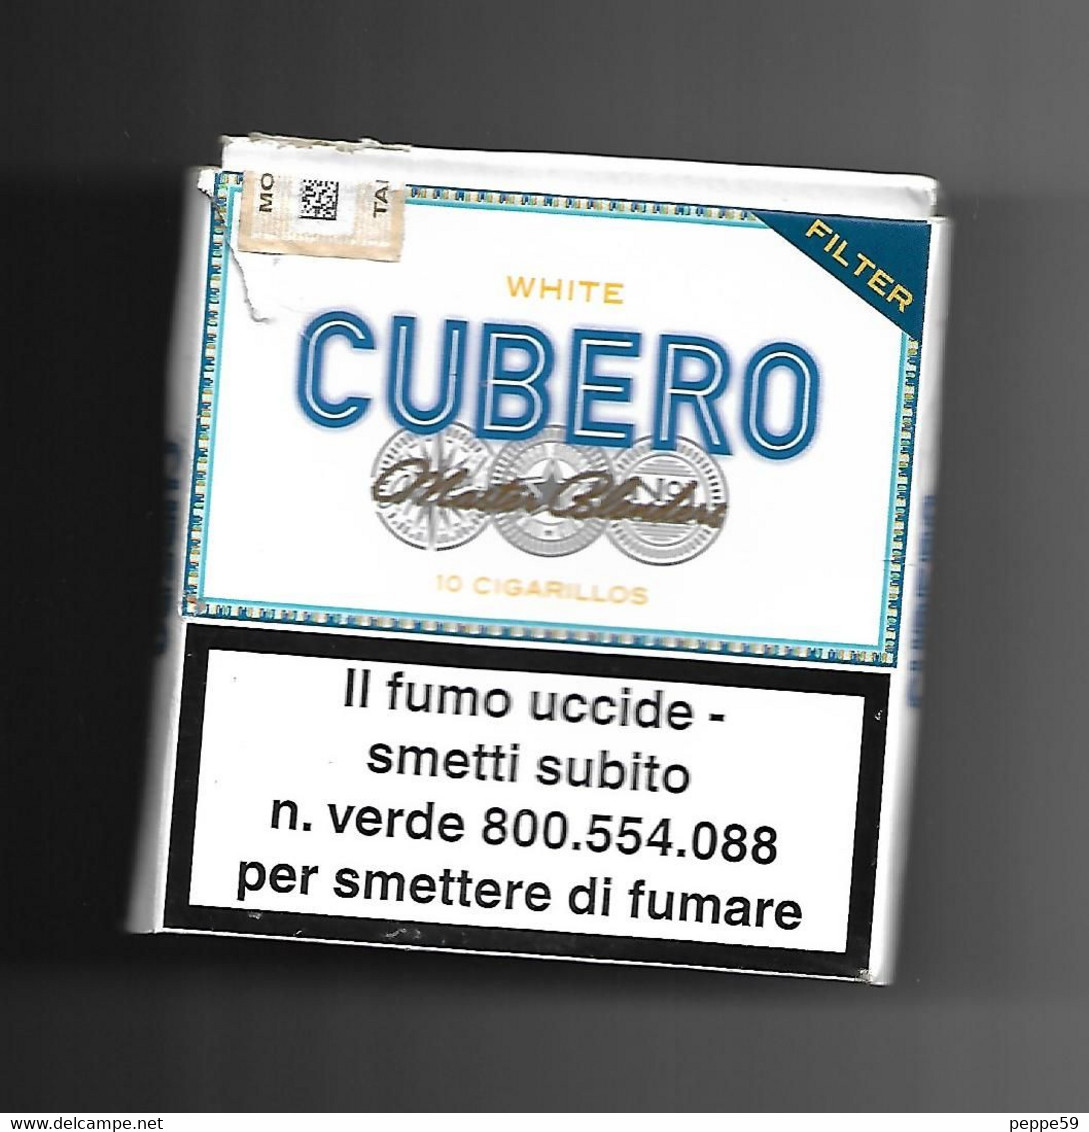 Tabacco Pacchetto Di Sigari Italia - 10 Cubero N.01 - (vuoto)  Tobacco-Tabac-Tabak-Tabaco - Zigarrenkisten (leer)